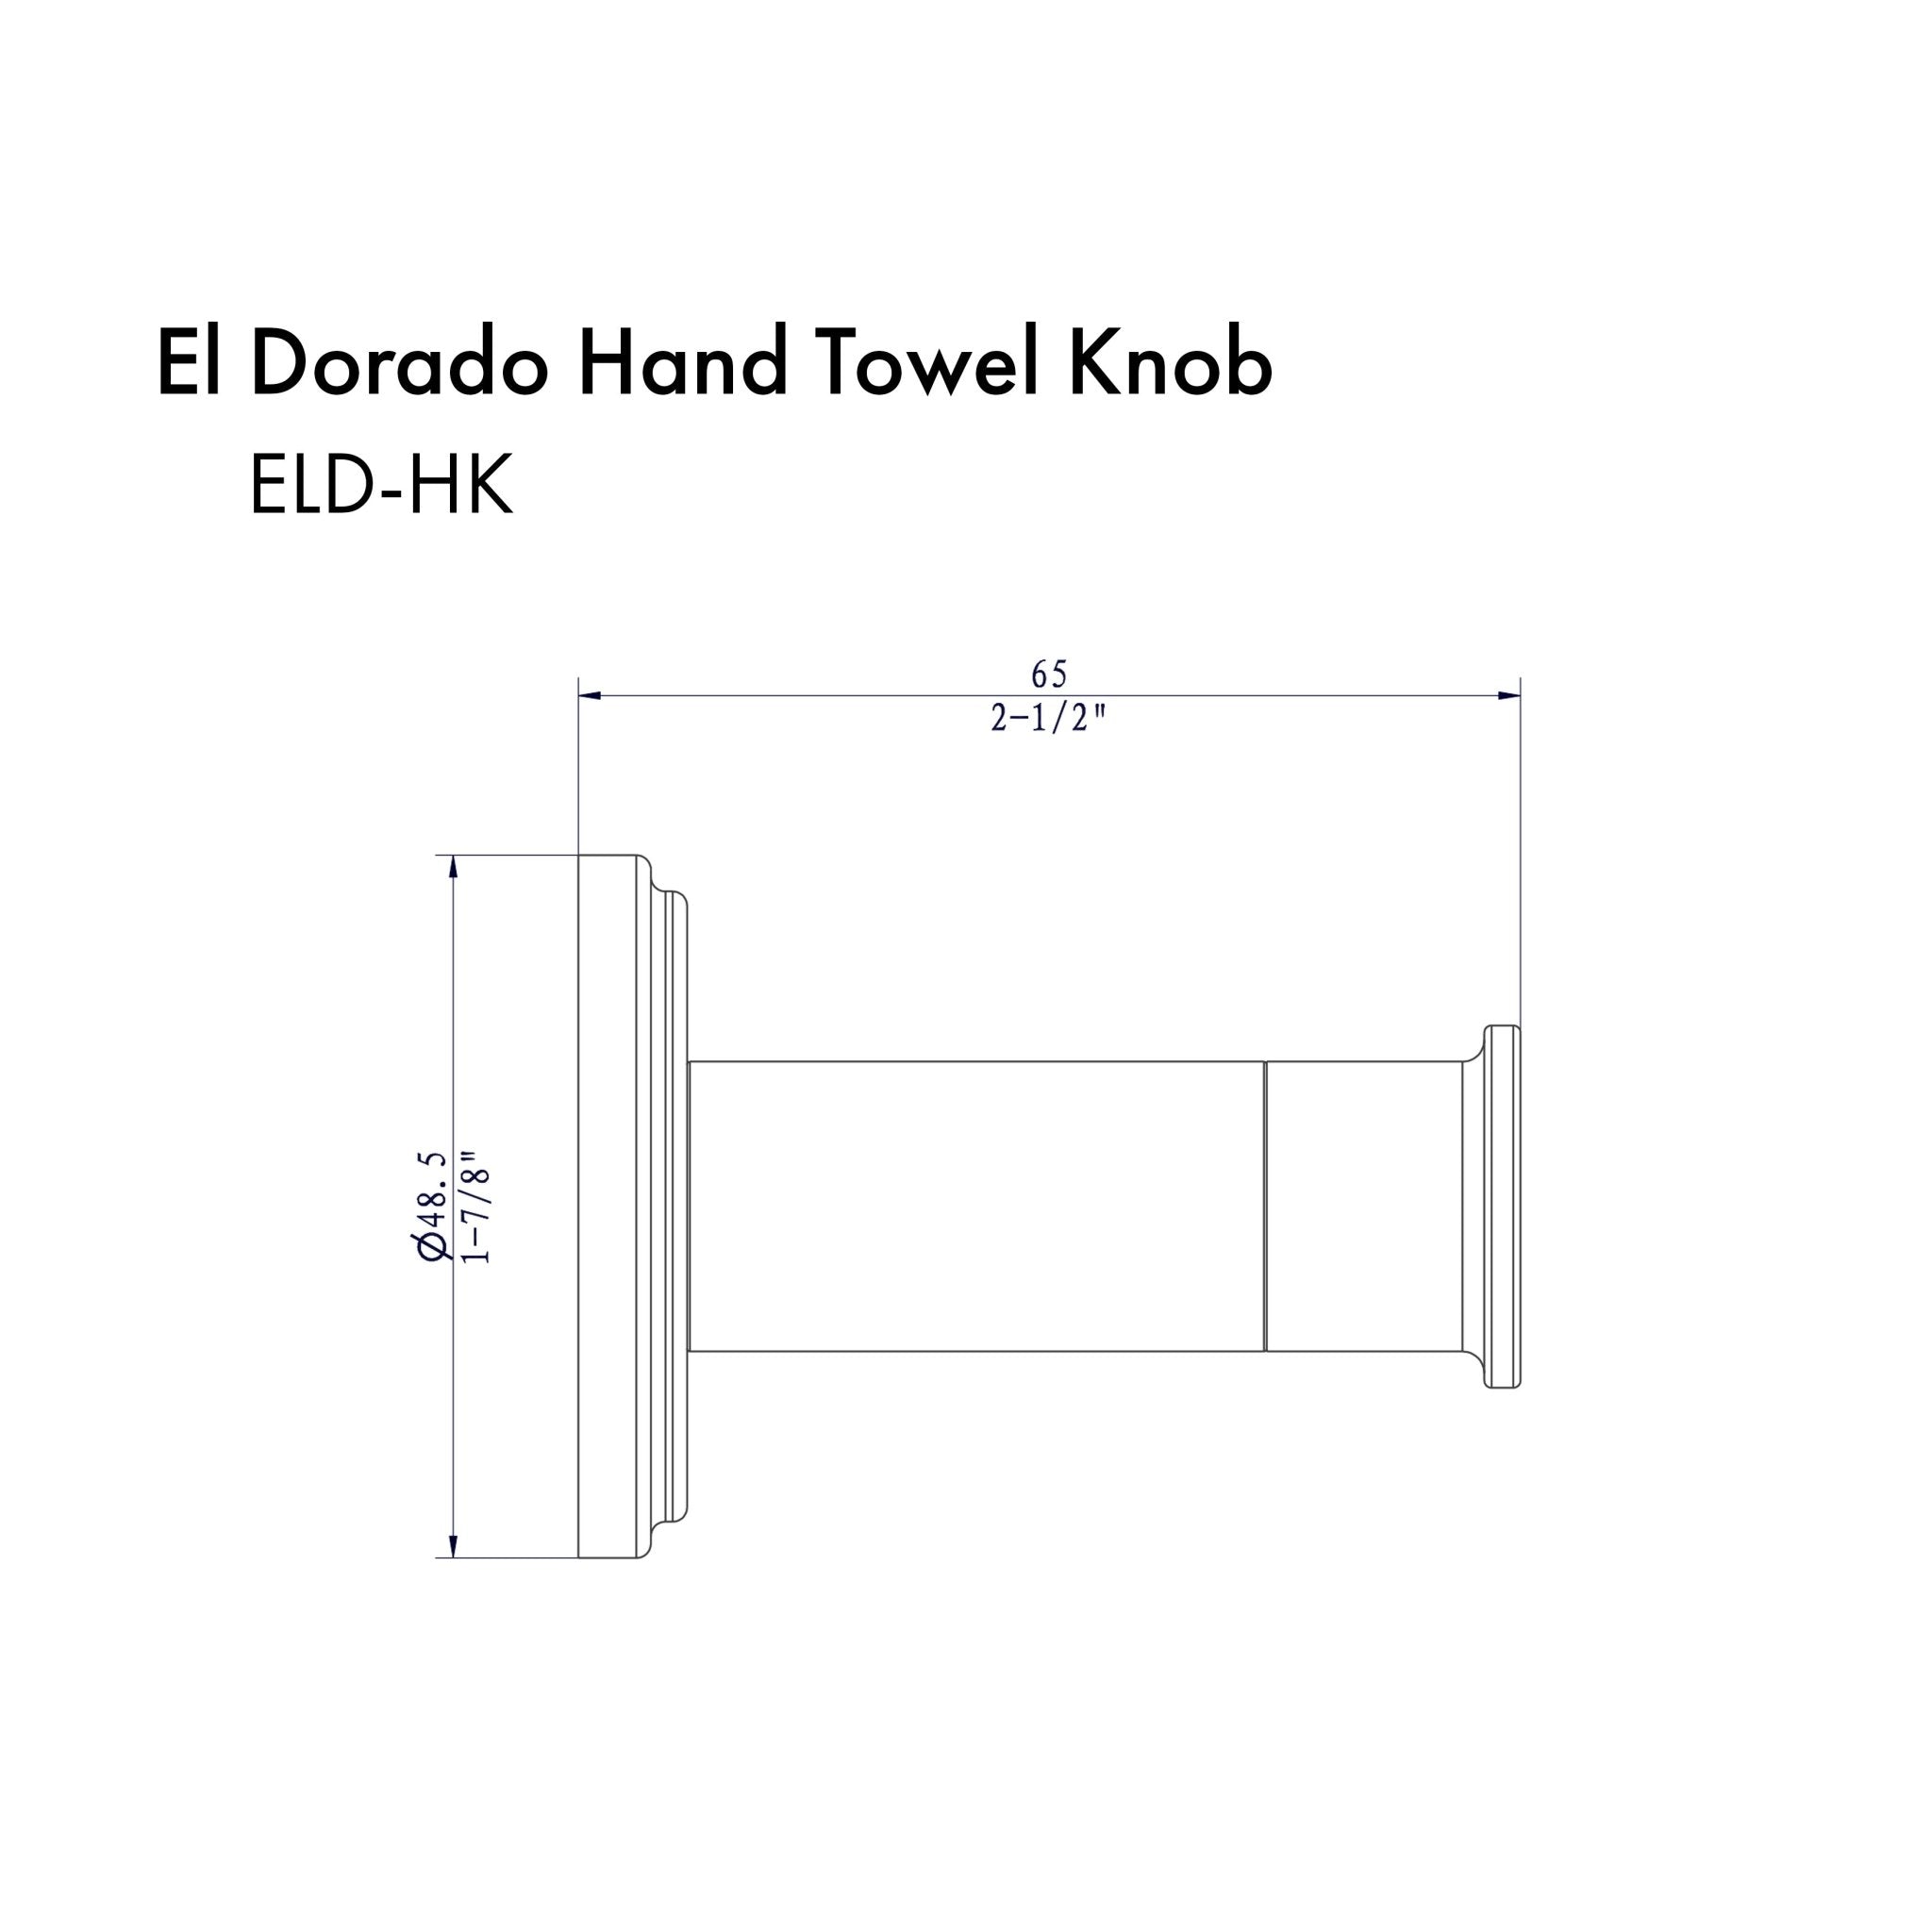 ZLINE El Dorado Towel Hook with color options (ELD-HK) Dimensions and Measurements